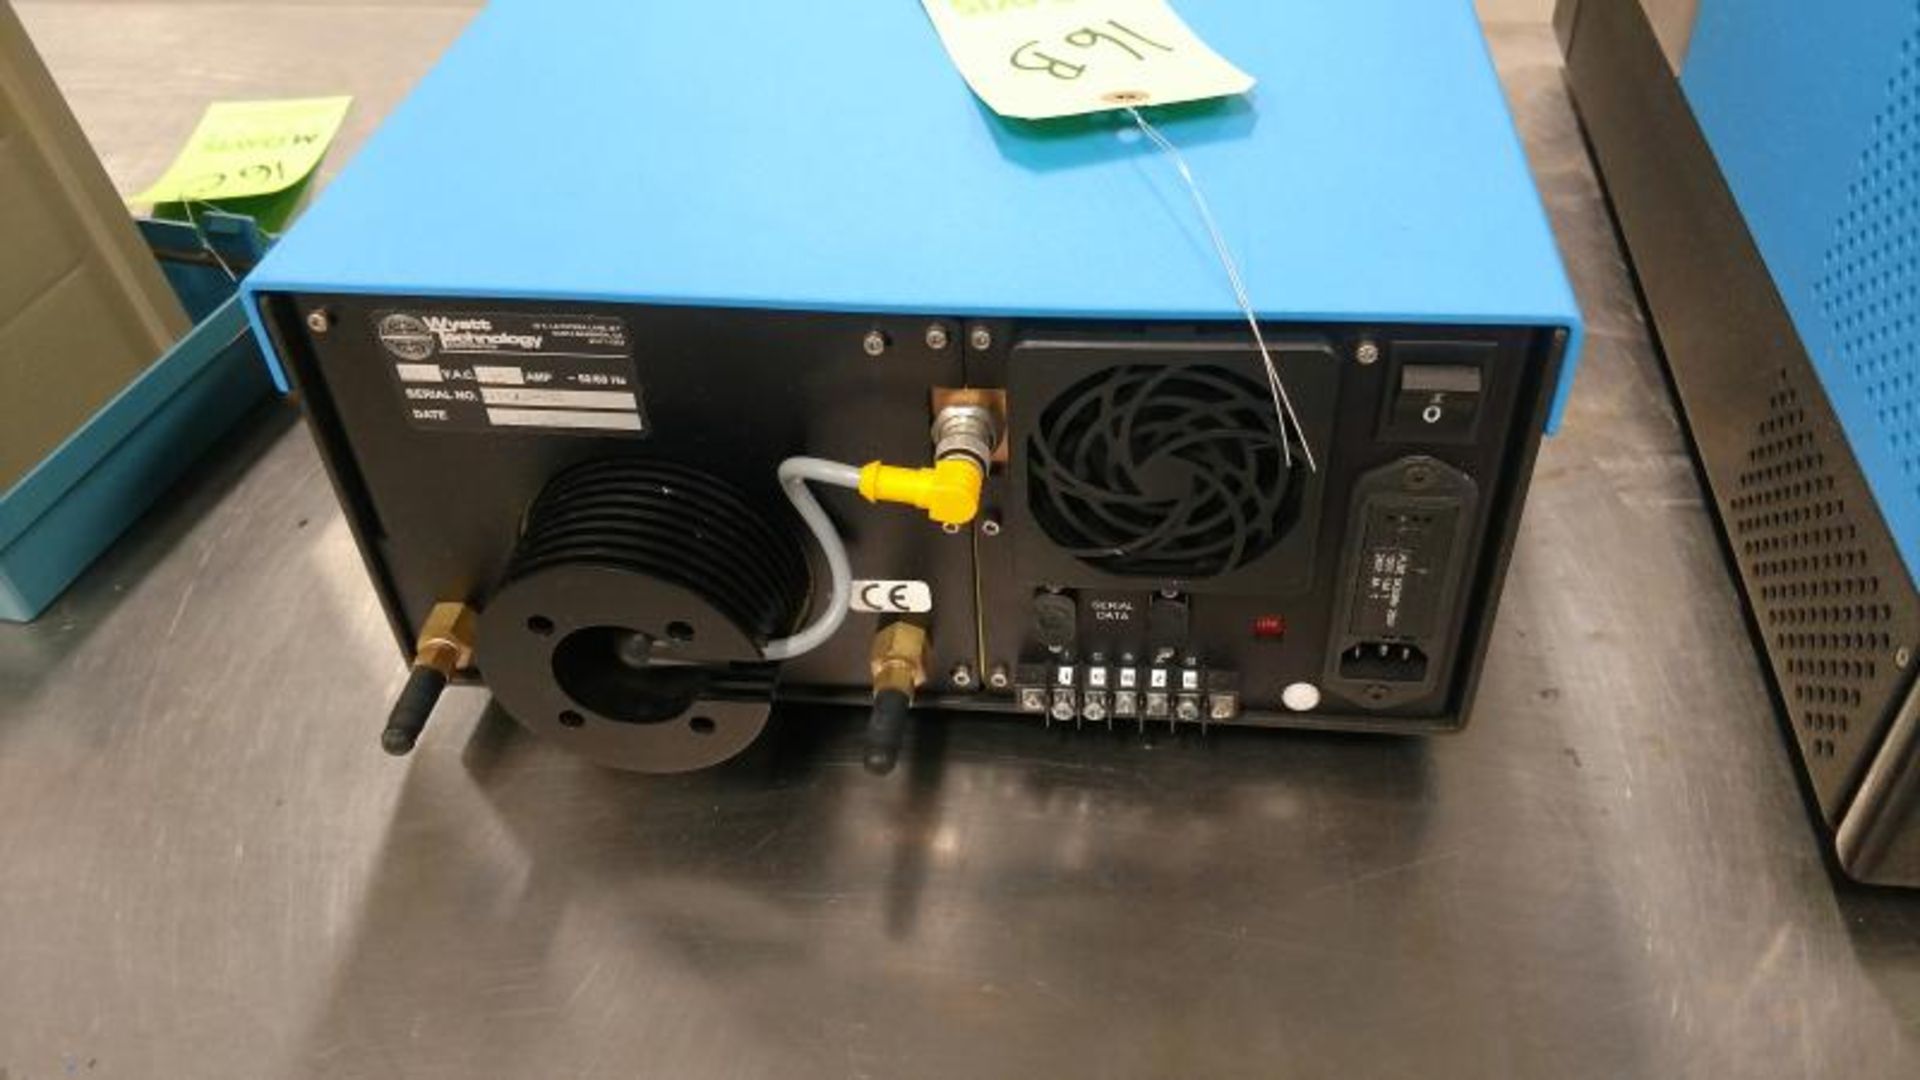 Wyatt Technology Optilab DSP Interferometric Refractometer, Serial # 694-DOP-690 - Image 2 of 2